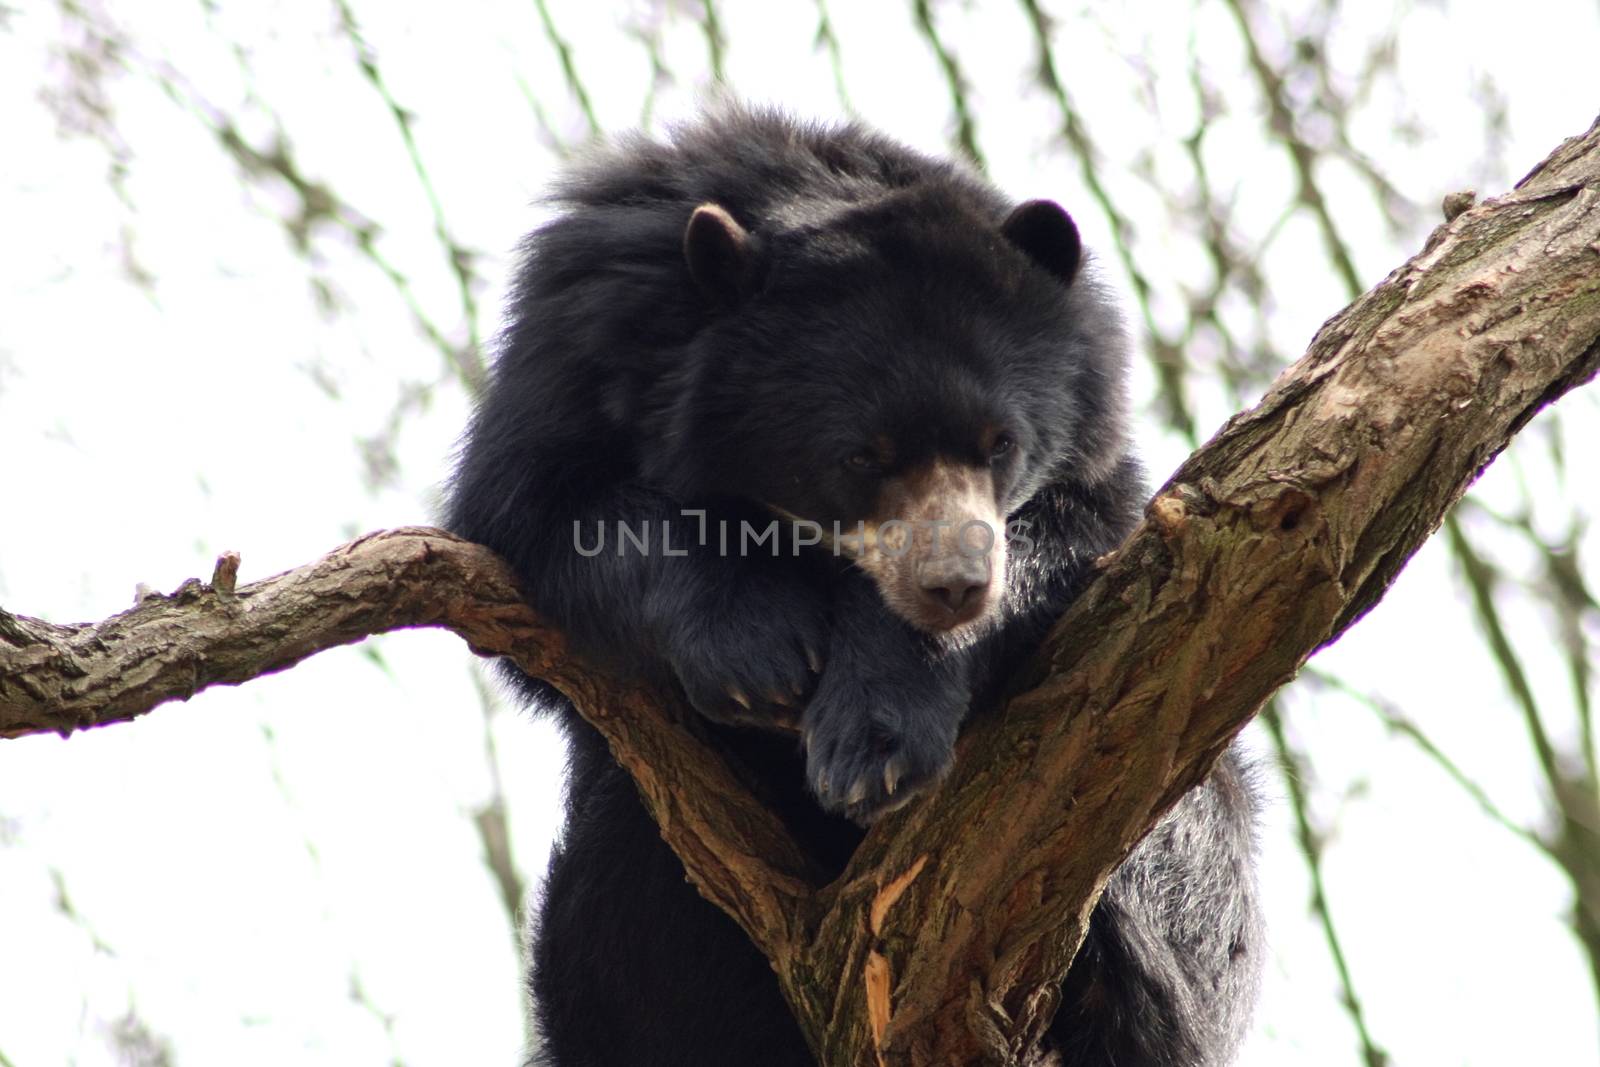 Spectacled bear (Tremarctos ornatus), sitting on a tree